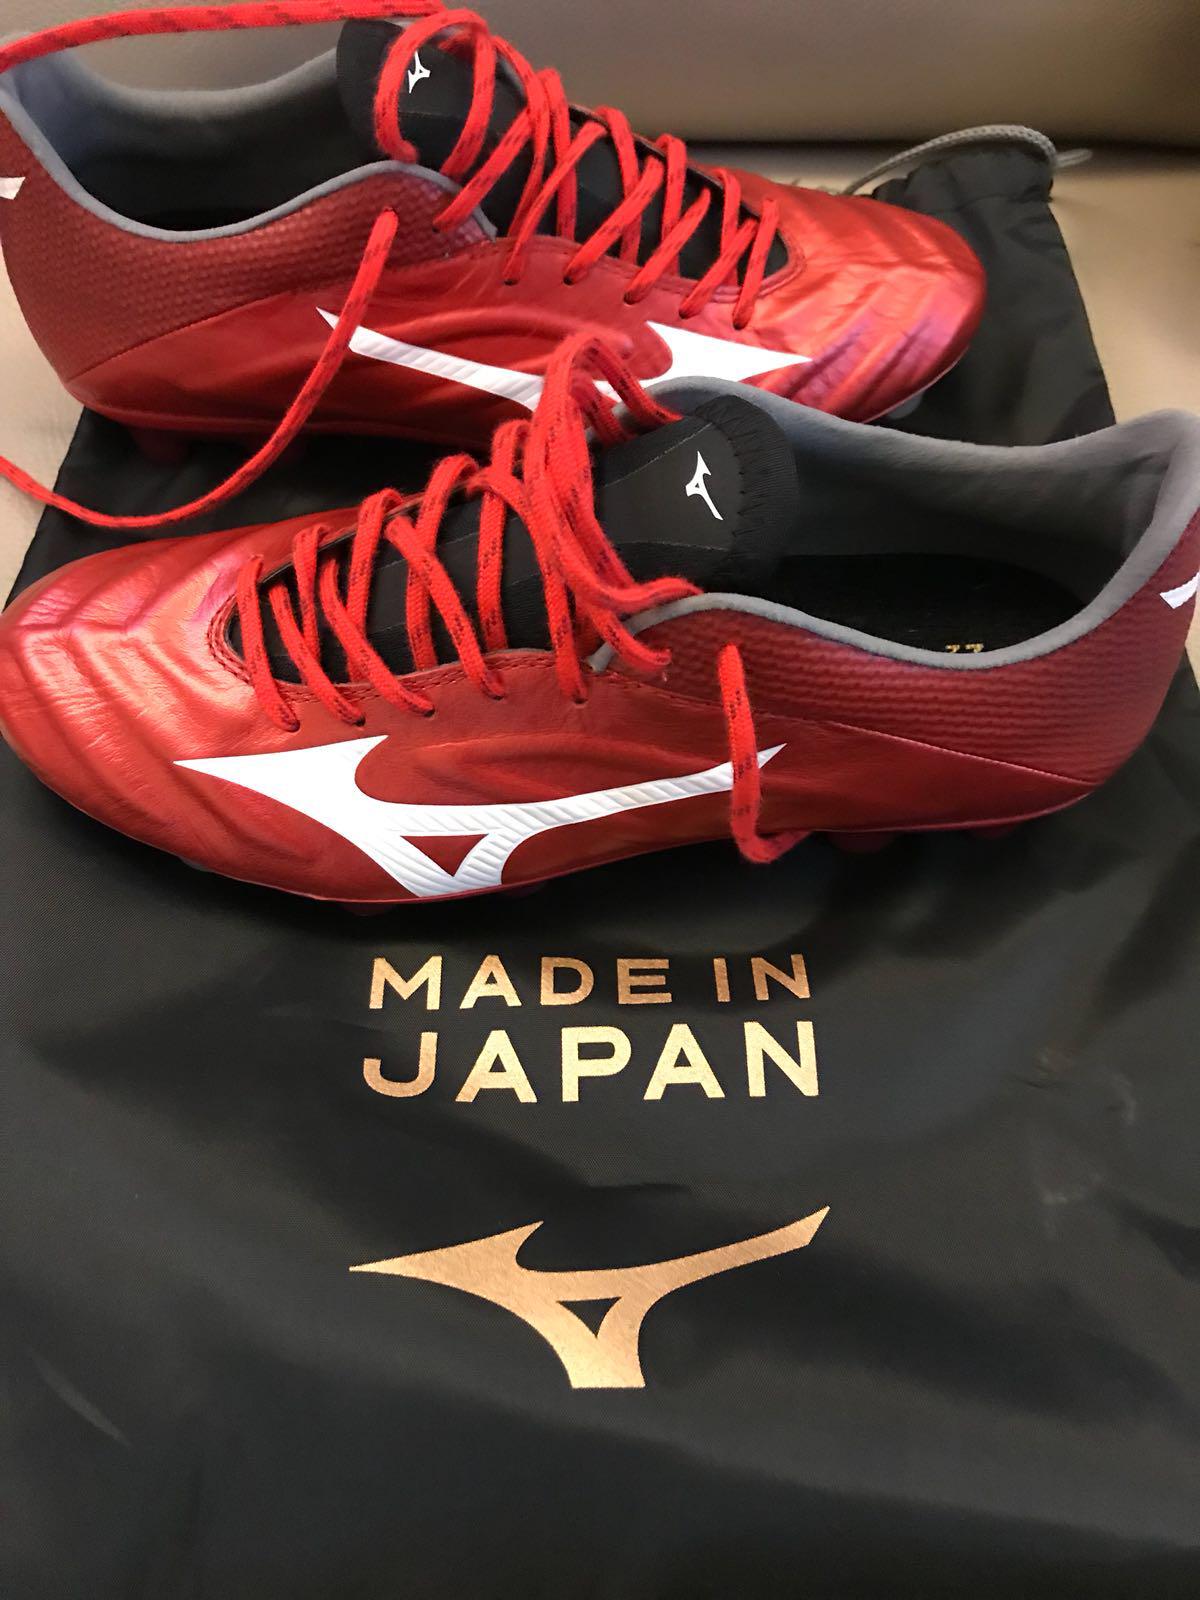 Mizuno 美津濃Rebula 2 V1 Japan 日製版波boot 足球鞋, 男裝, 鞋, 西裝